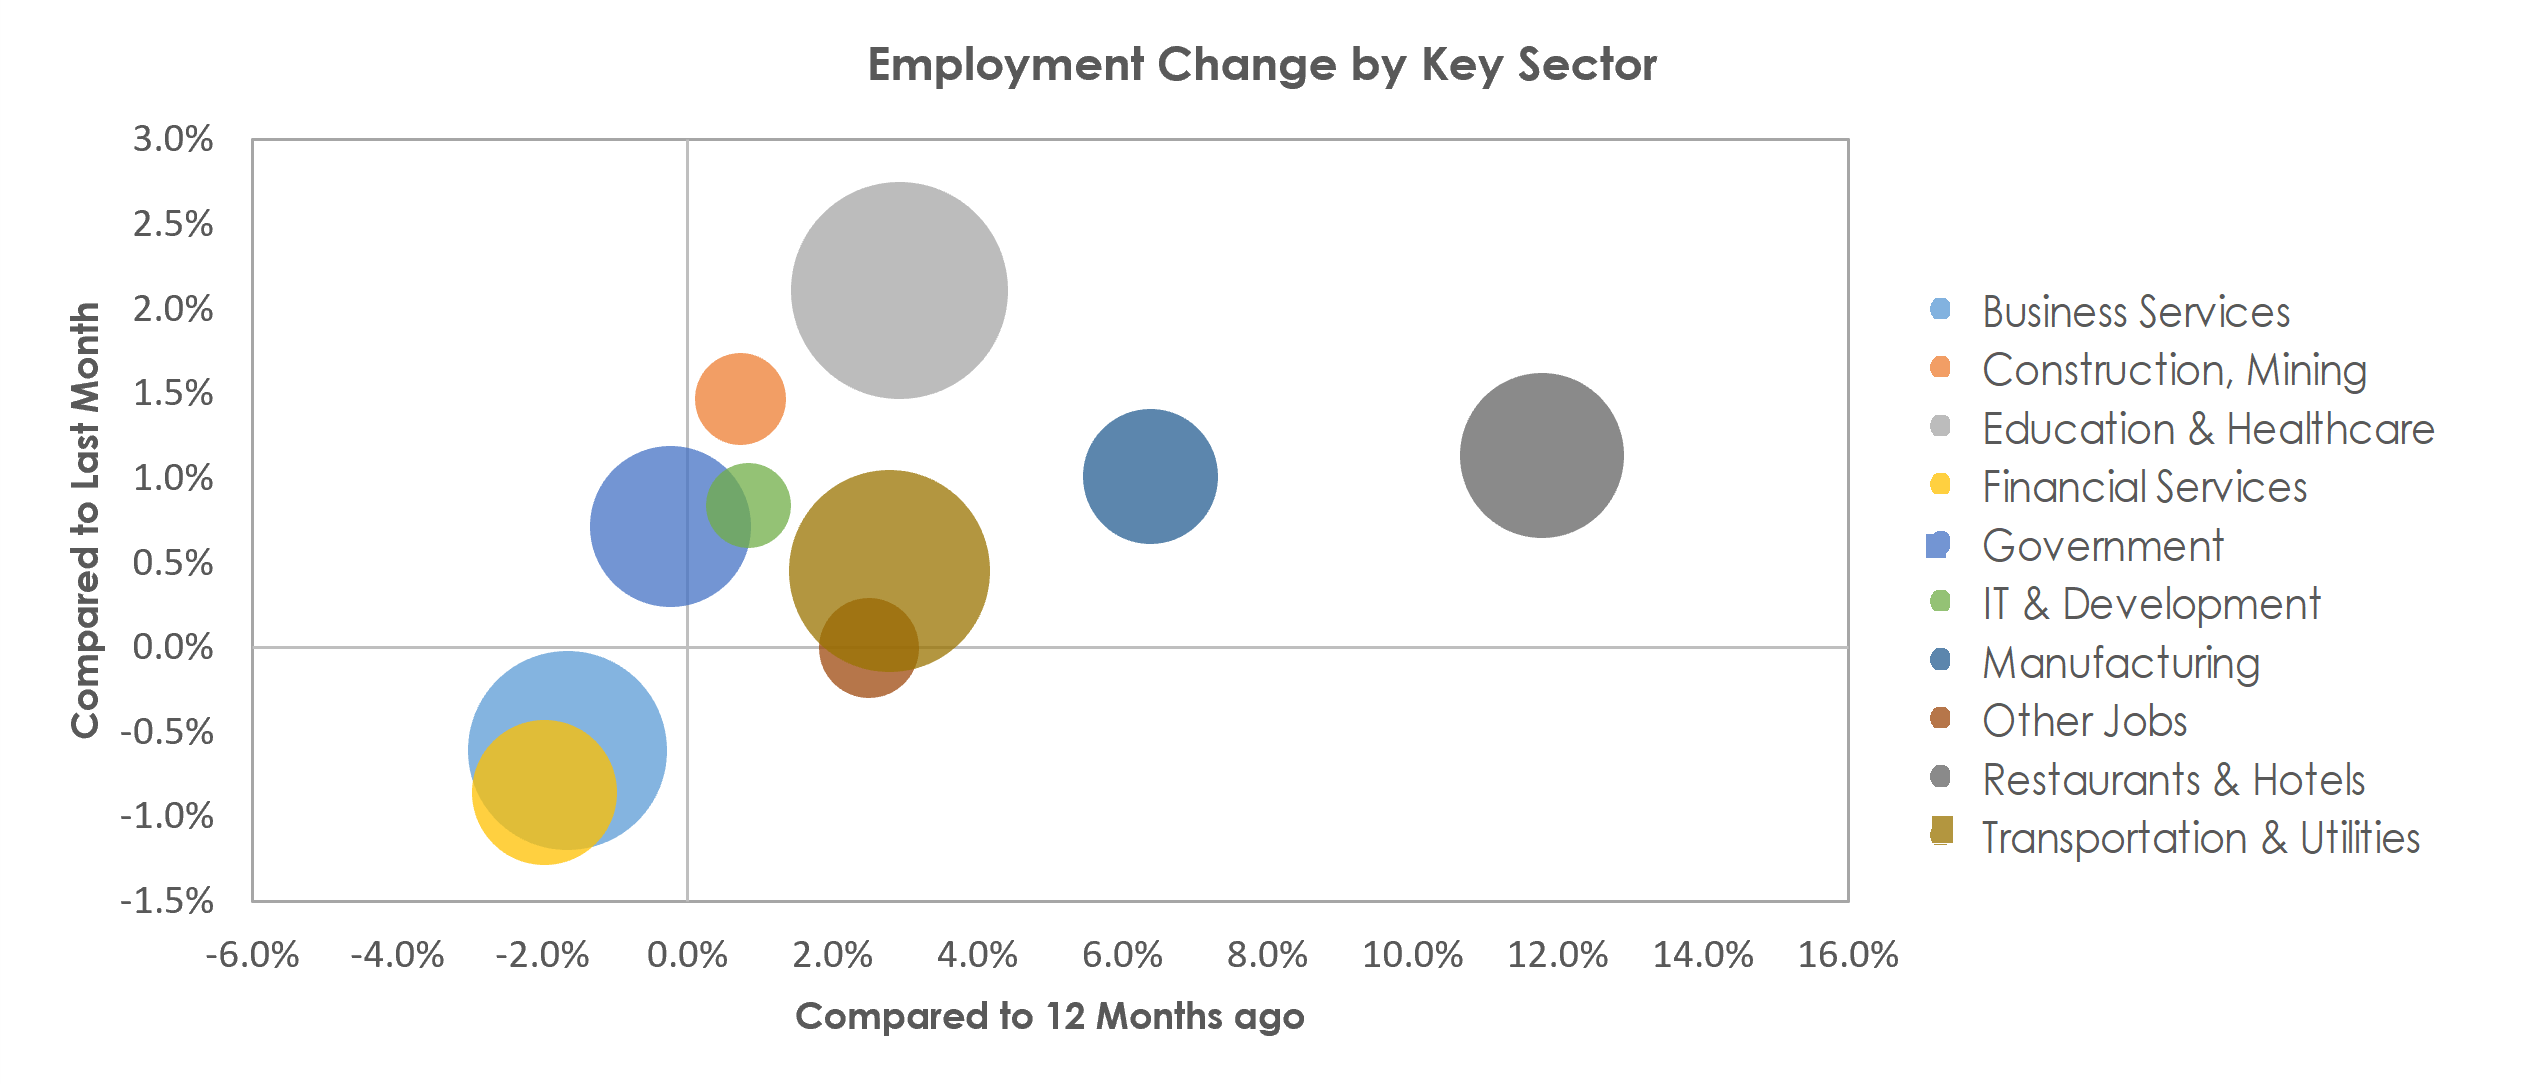 Bridgeport-Stamford-Norwalk, CT Unemployment by Industry October 2022